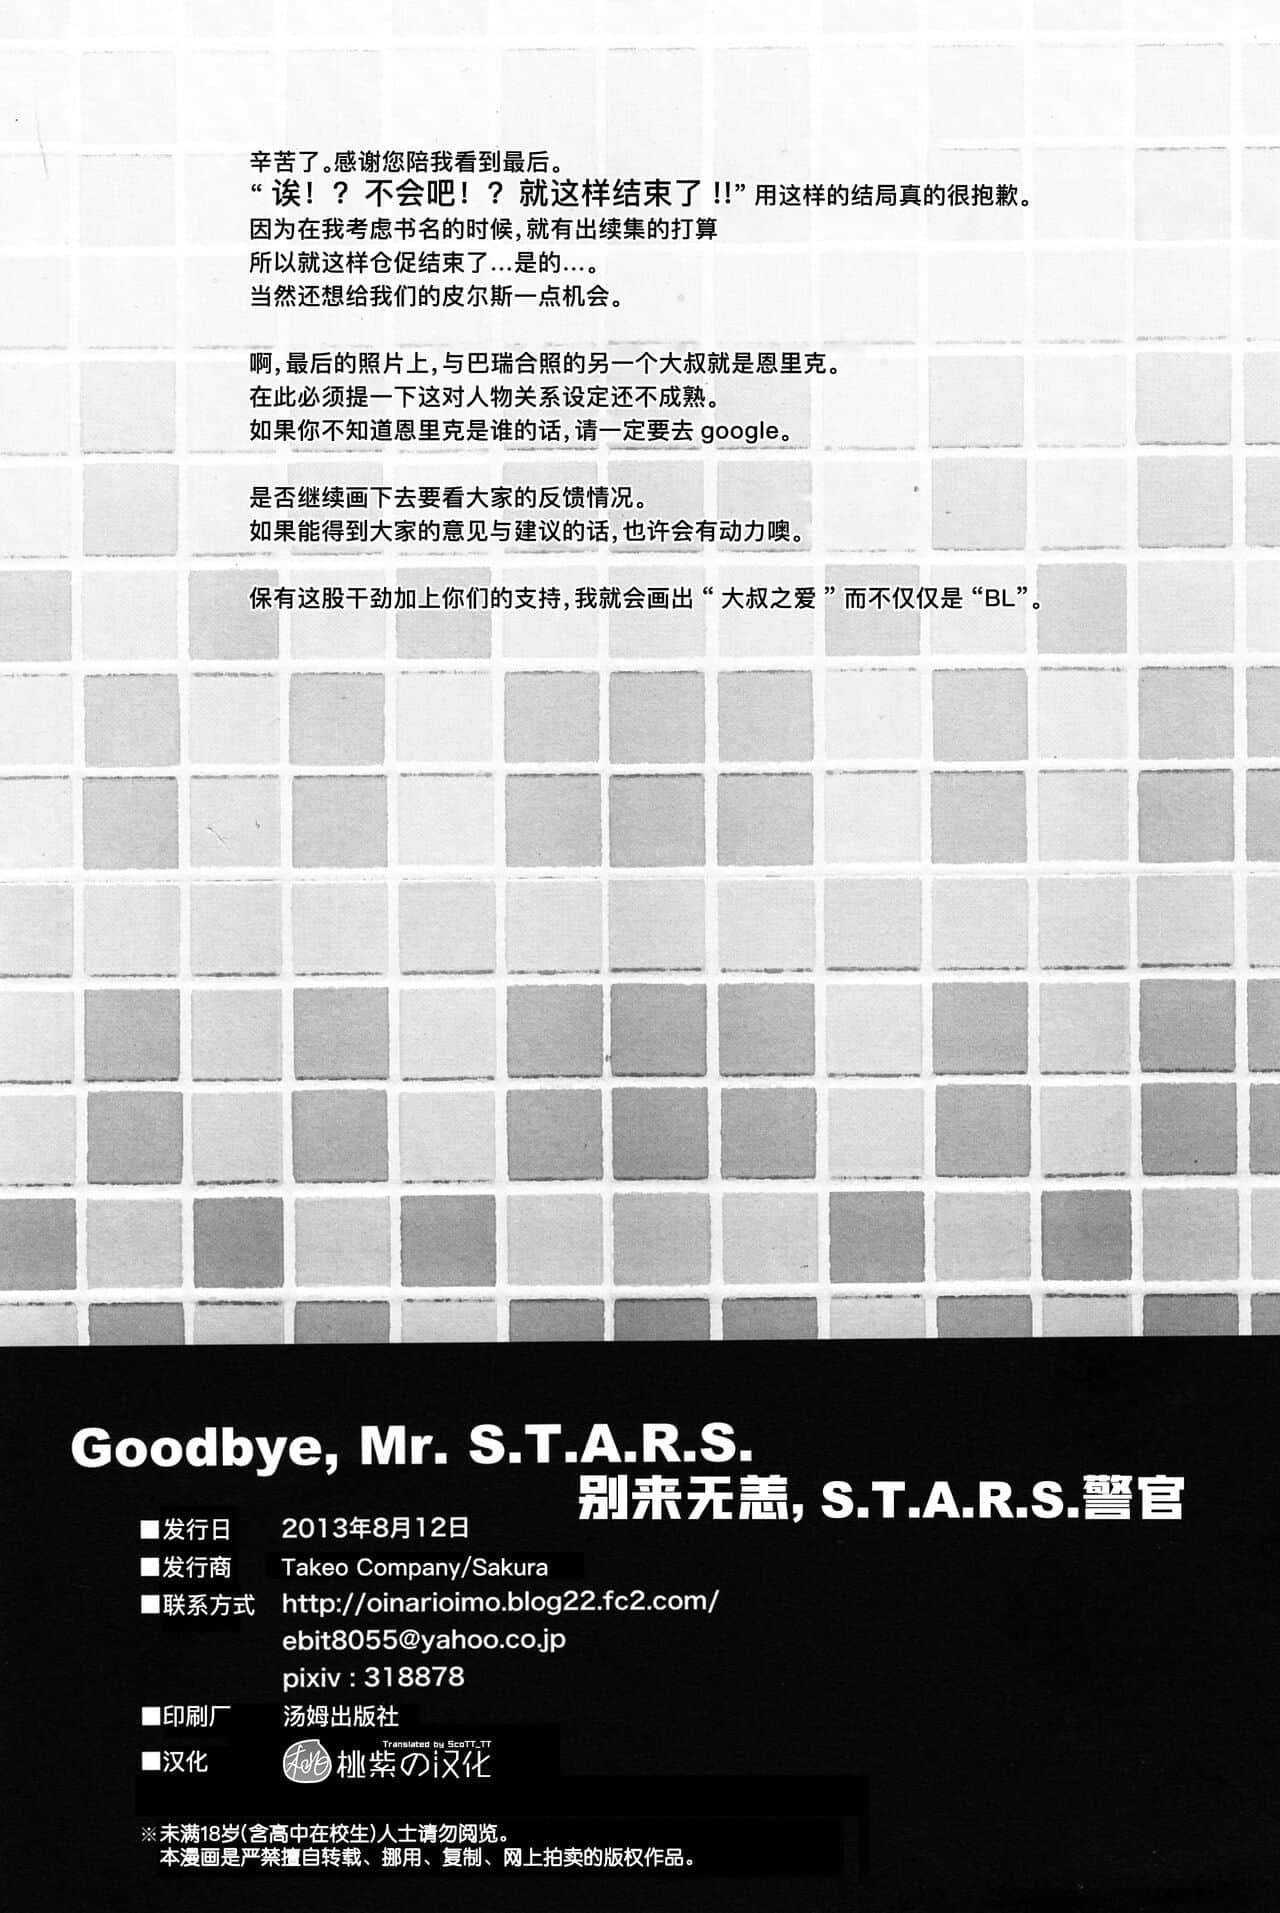 Goodbye, Mr. S.T.A.R.S. (Resident Evil)｜别来无恙S.T.A.R.S.警官(生化危机) - Foto 41